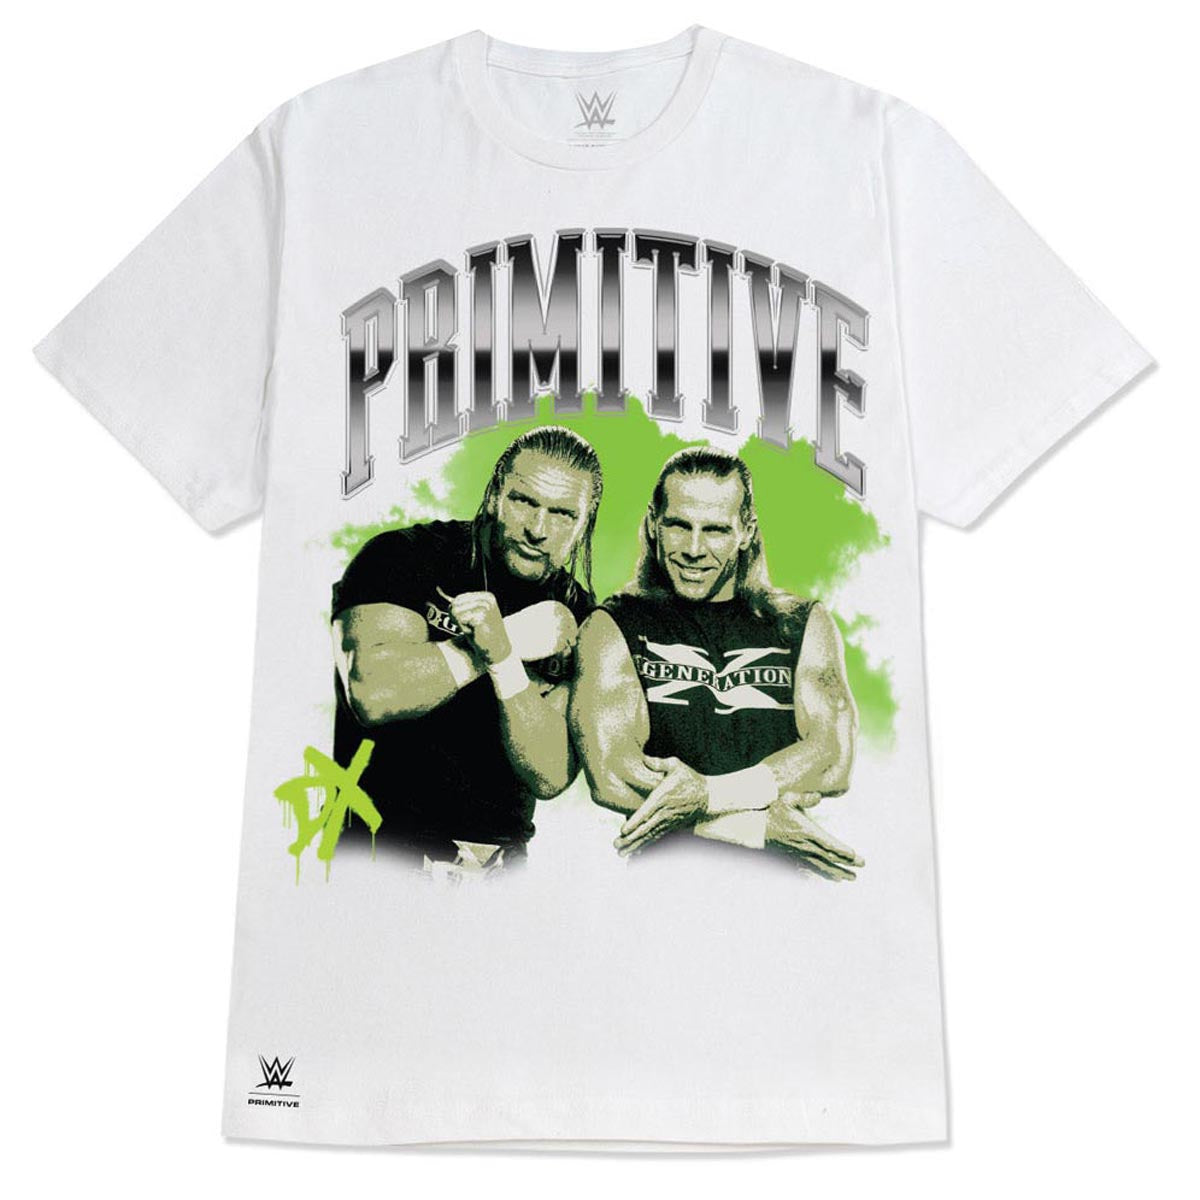 Primitive x WWE Generation T-Shirt - White image 1